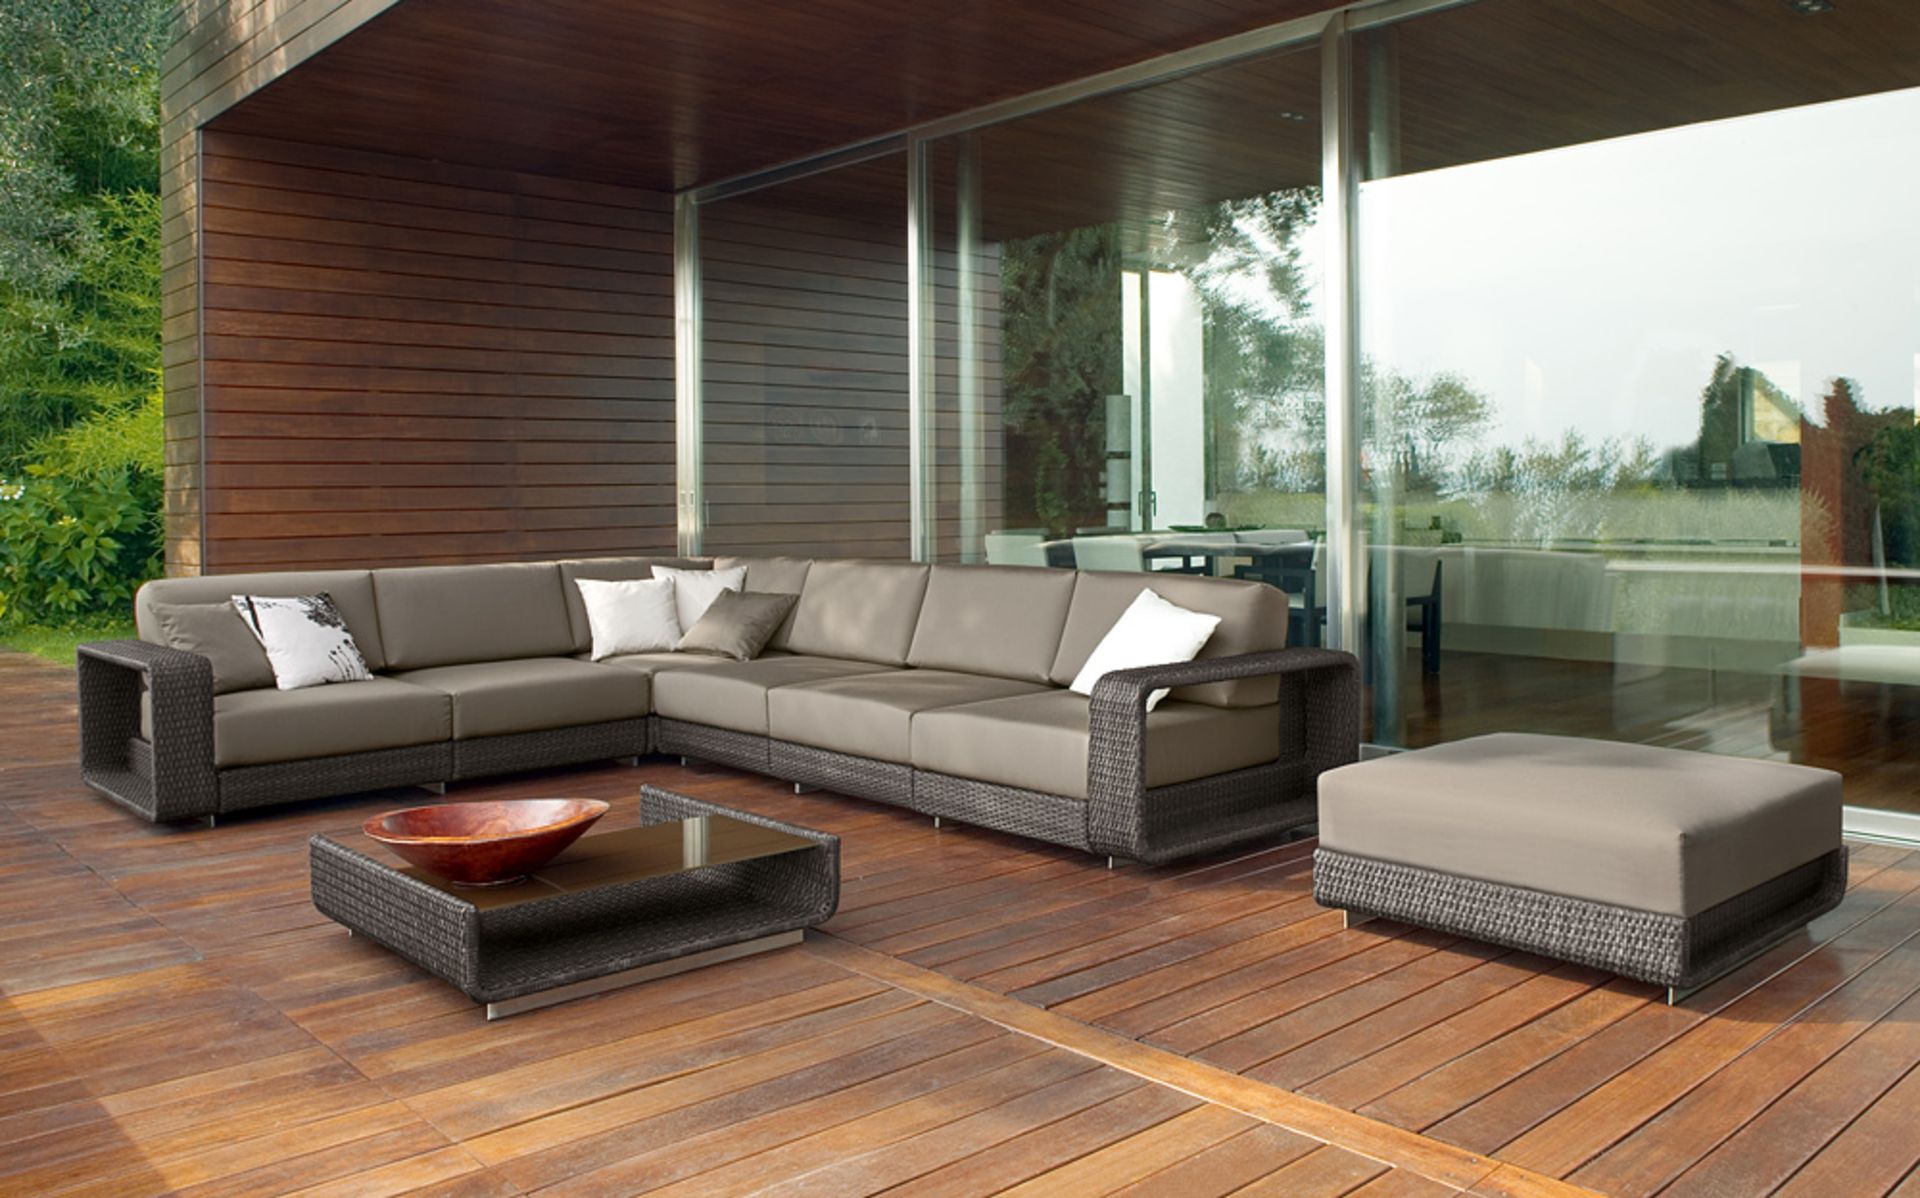 This stunning premium full sized 8 piece elegant brown sectional rattan corner sofa set brings - Image 5 of 5